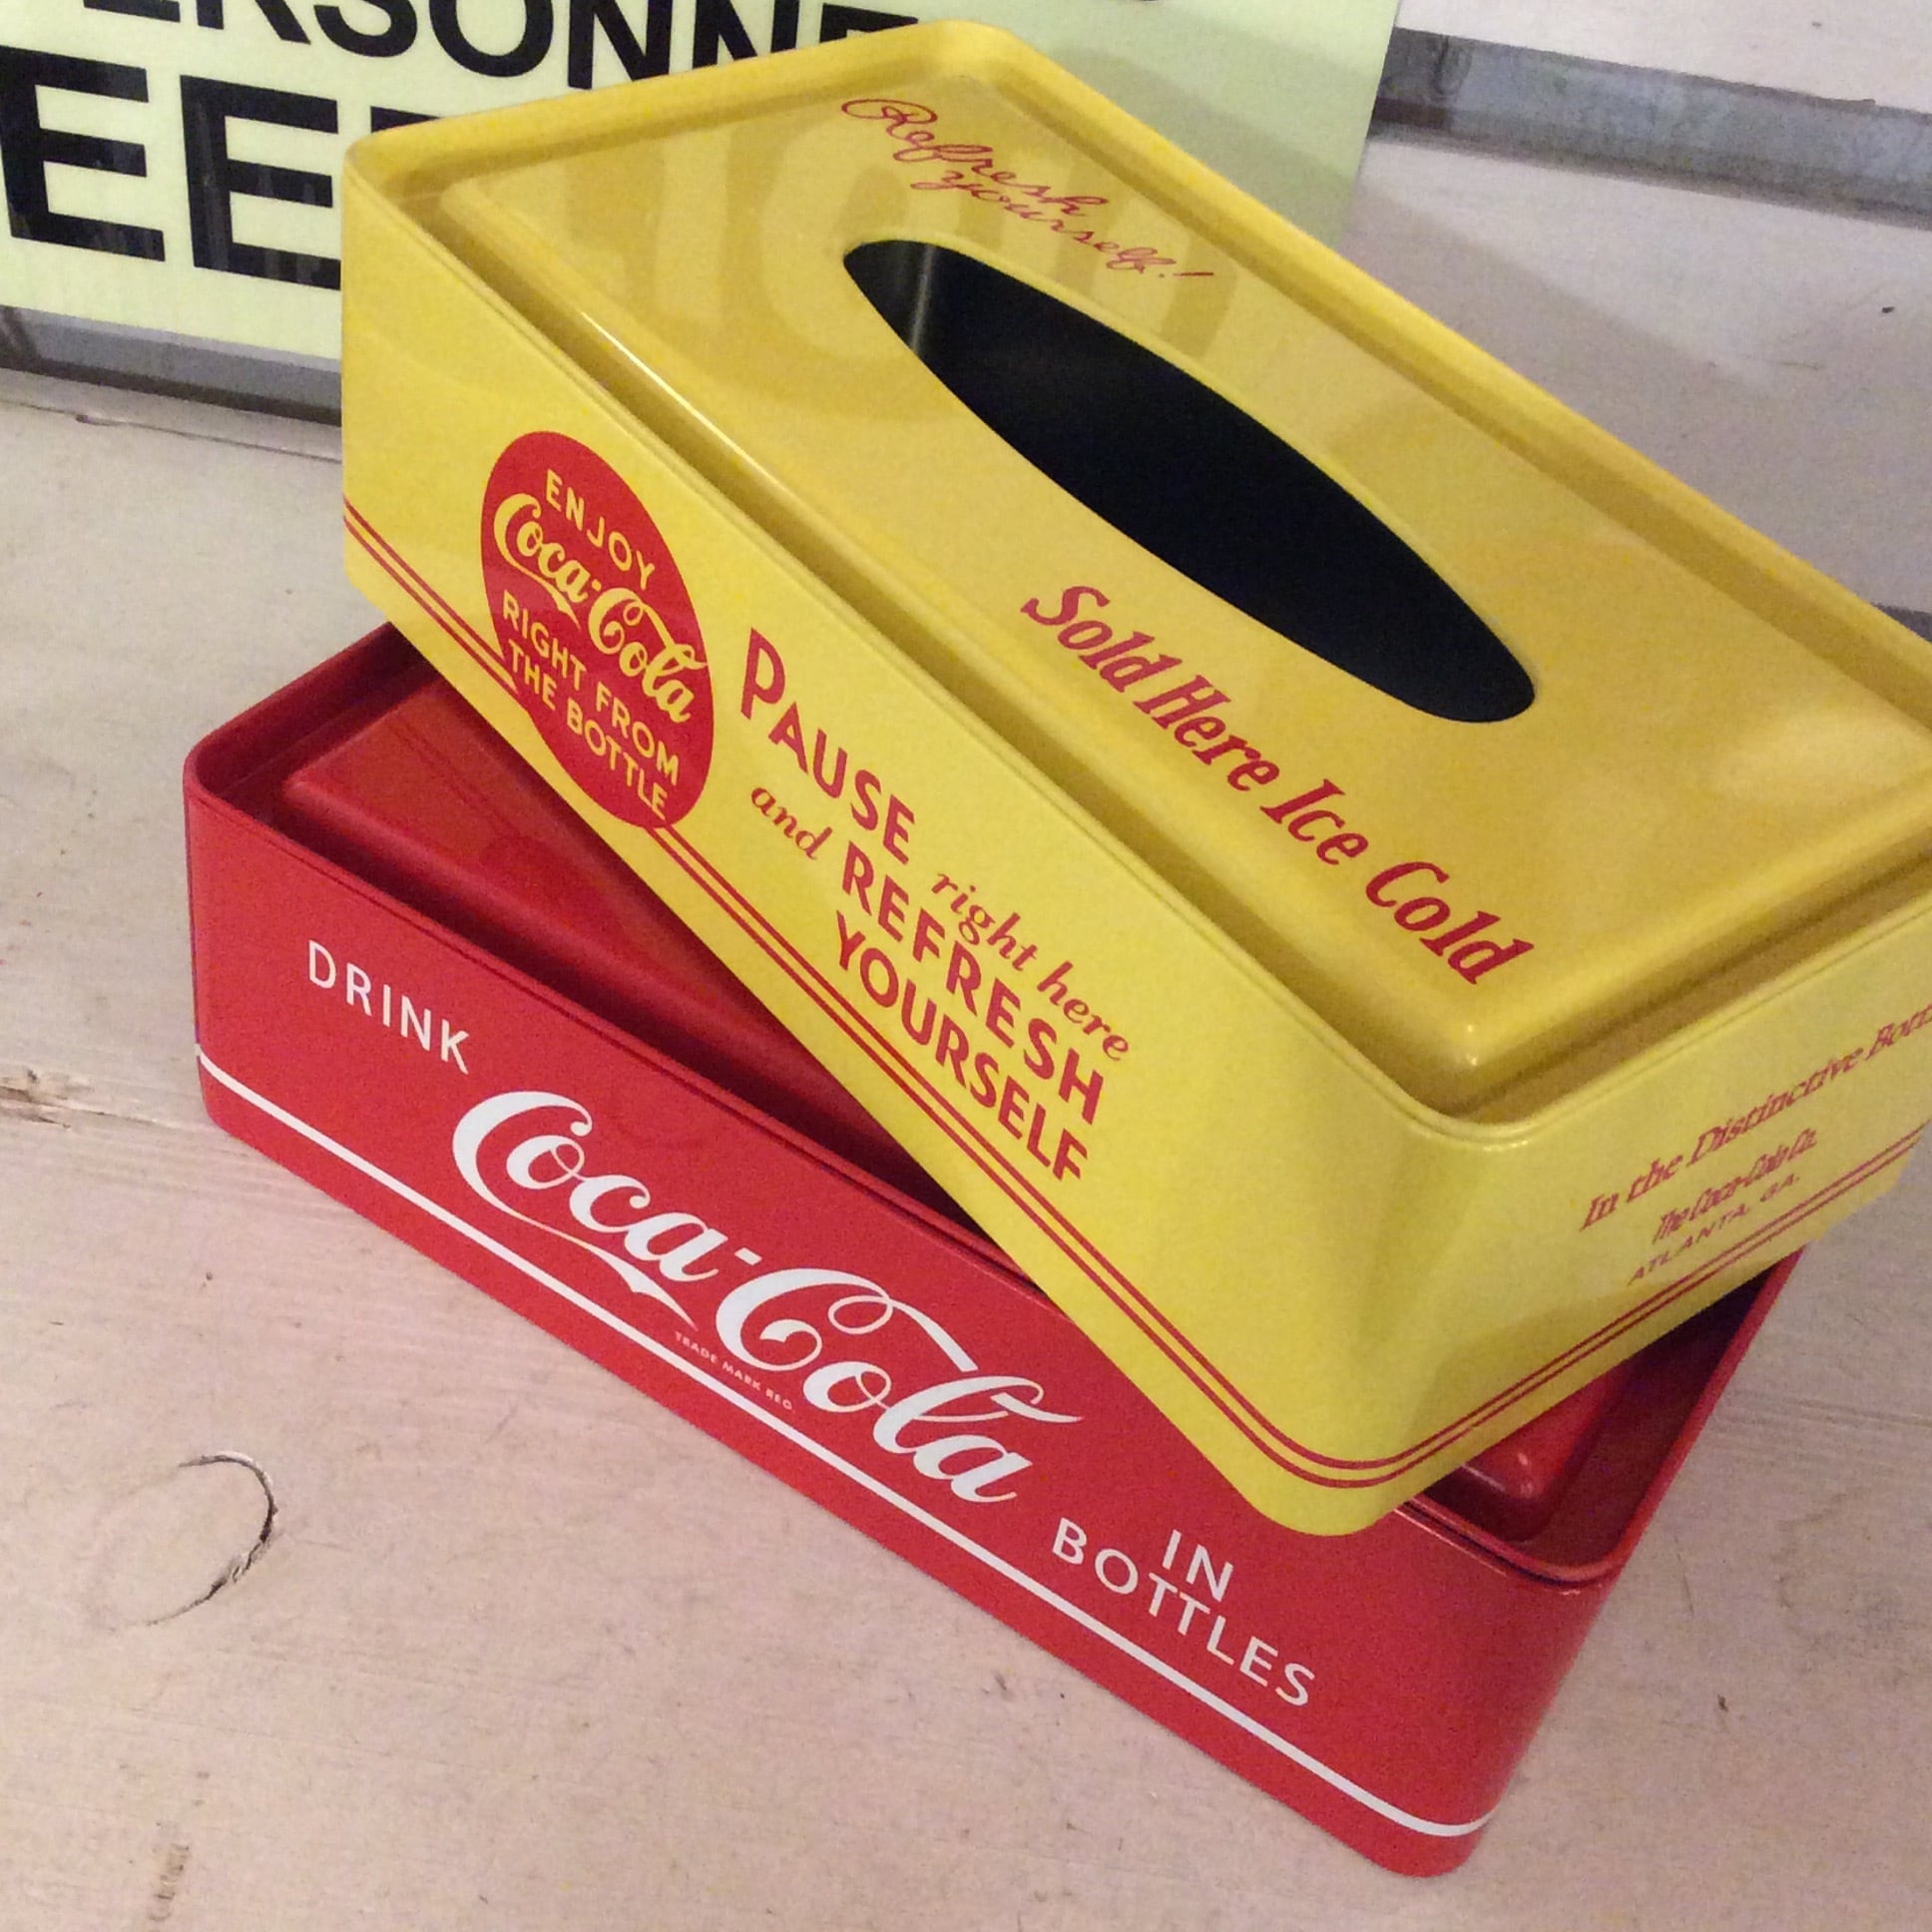 Coca-Cola TISSUE CASE コカ・コーラ ティッシュケース 雑貨株式会社